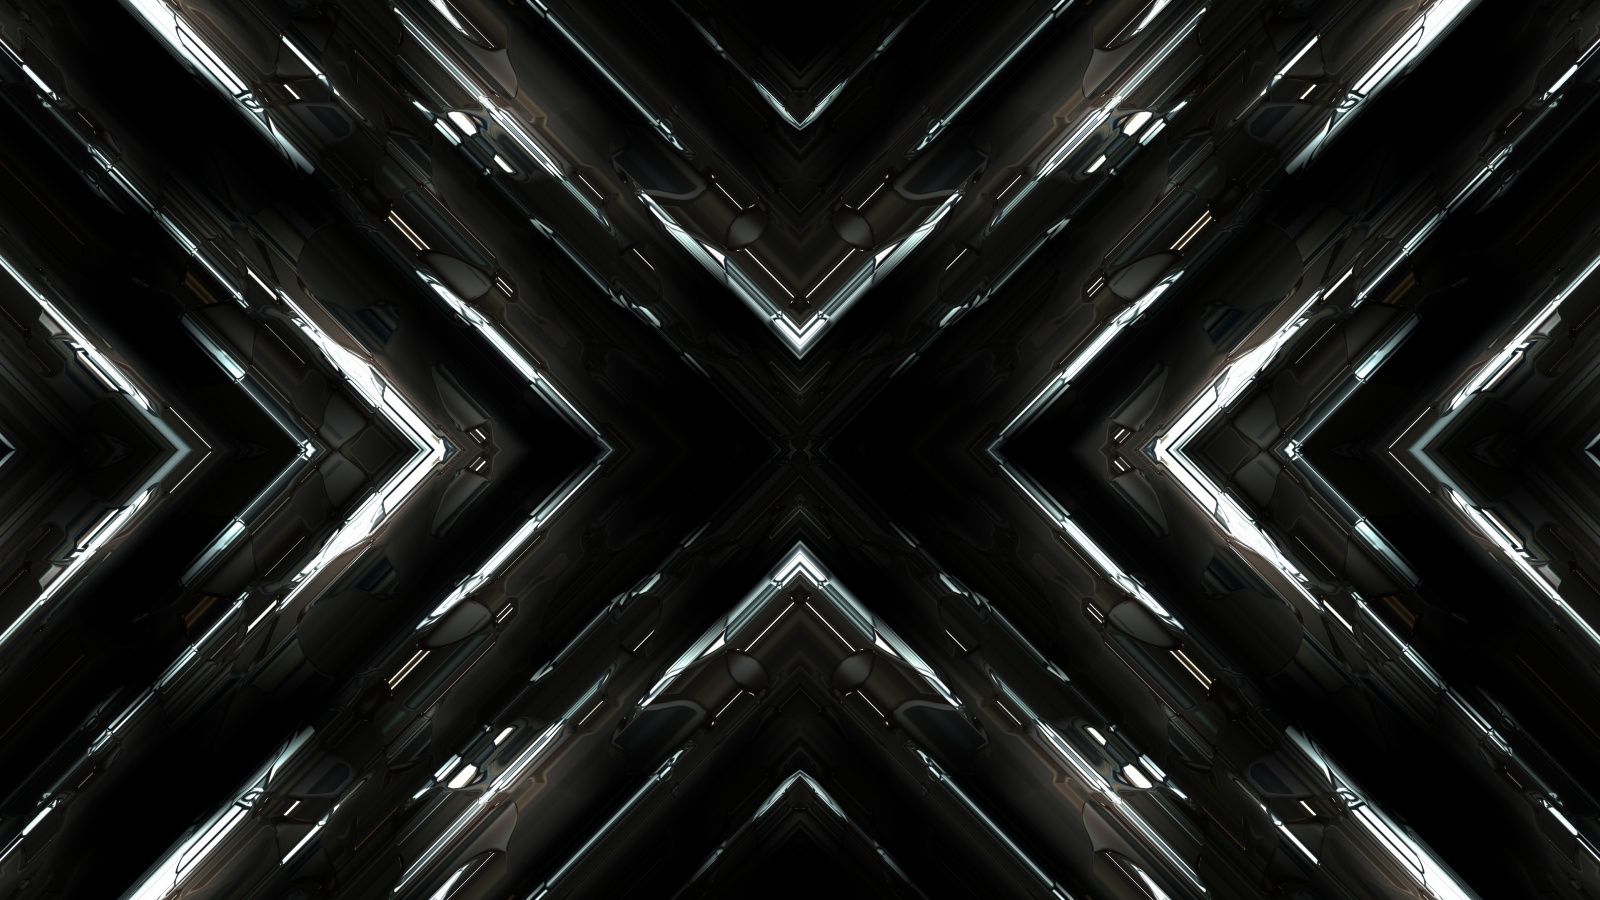 Dark Abstract Wallpapers - 4k, HD Dark Abstract Backgrounds on WallpaperBat